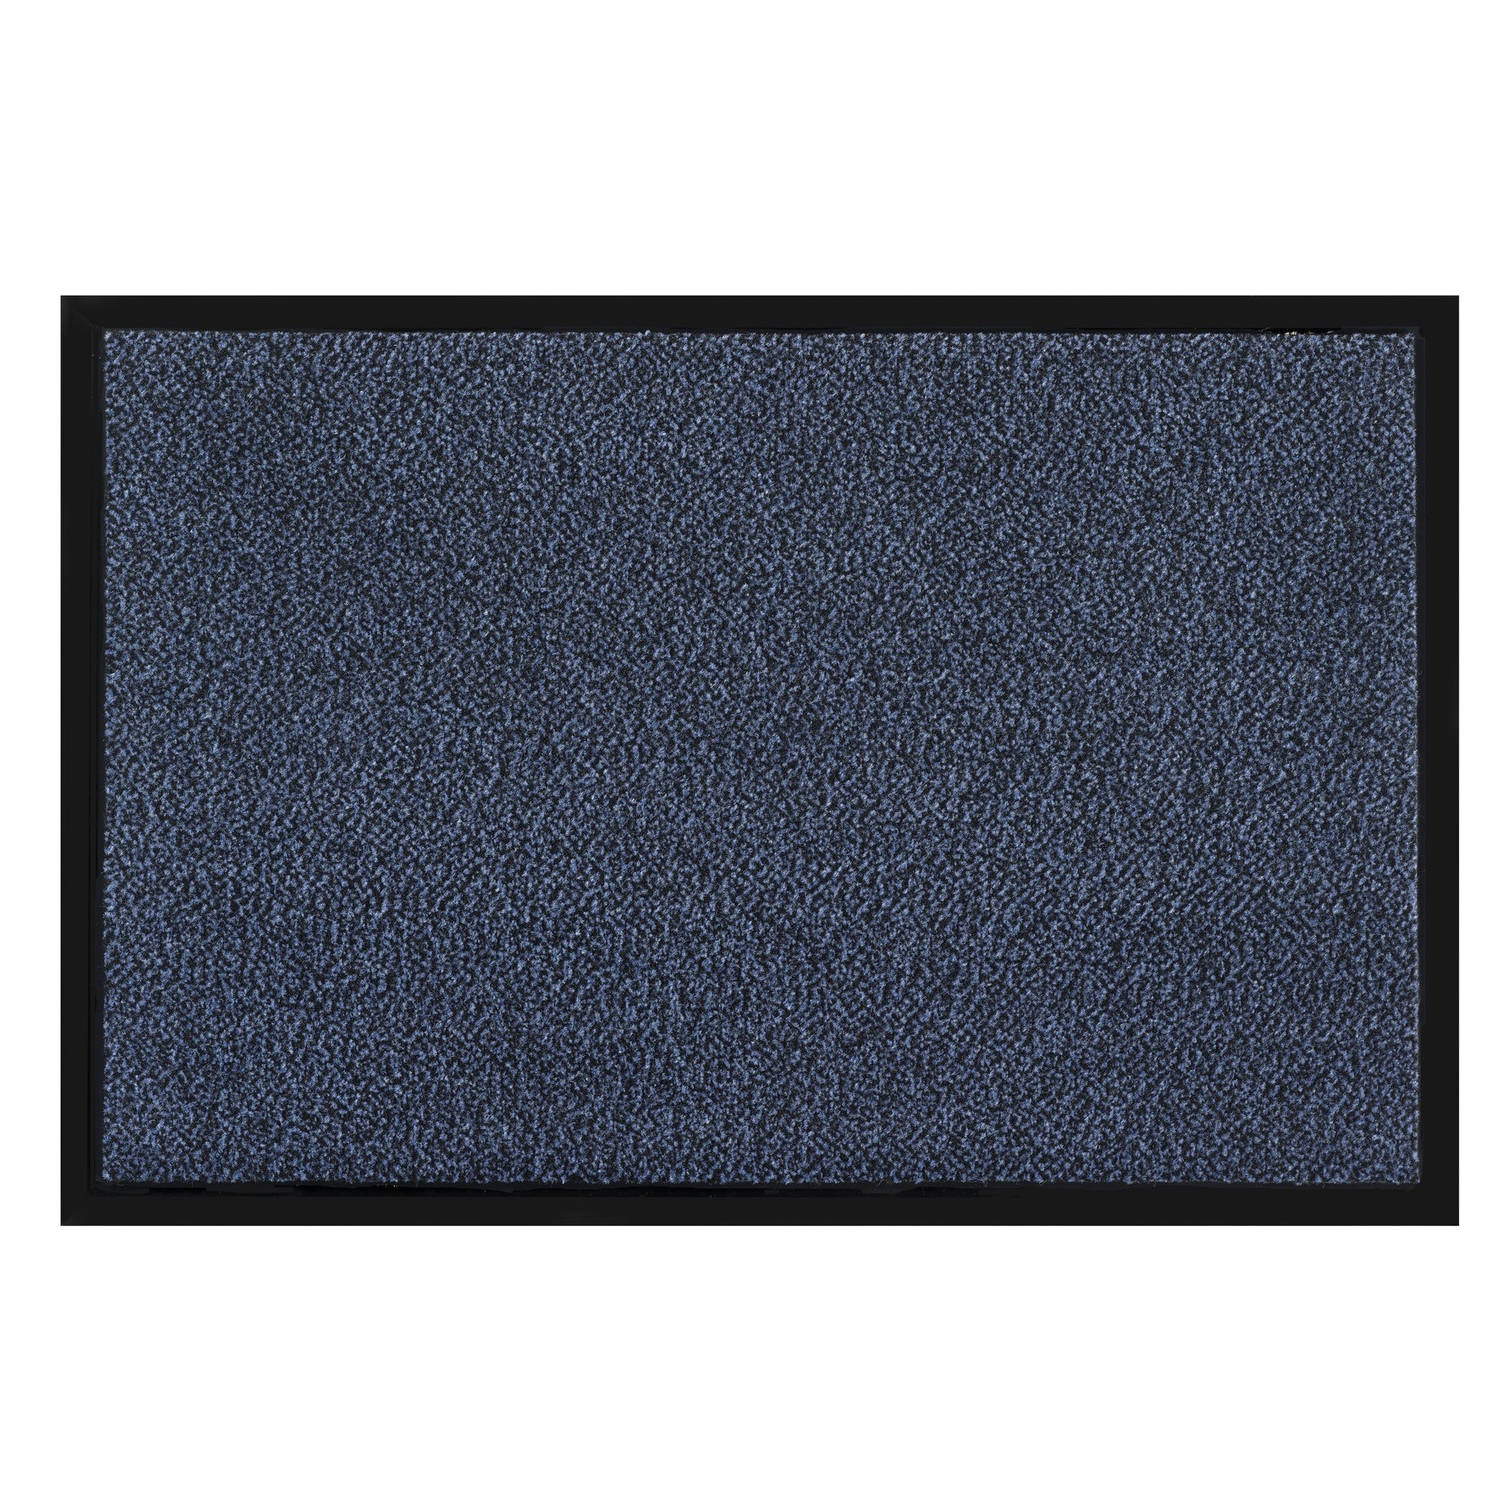 Droogloopmat SHANNON blauw 60x90 cm